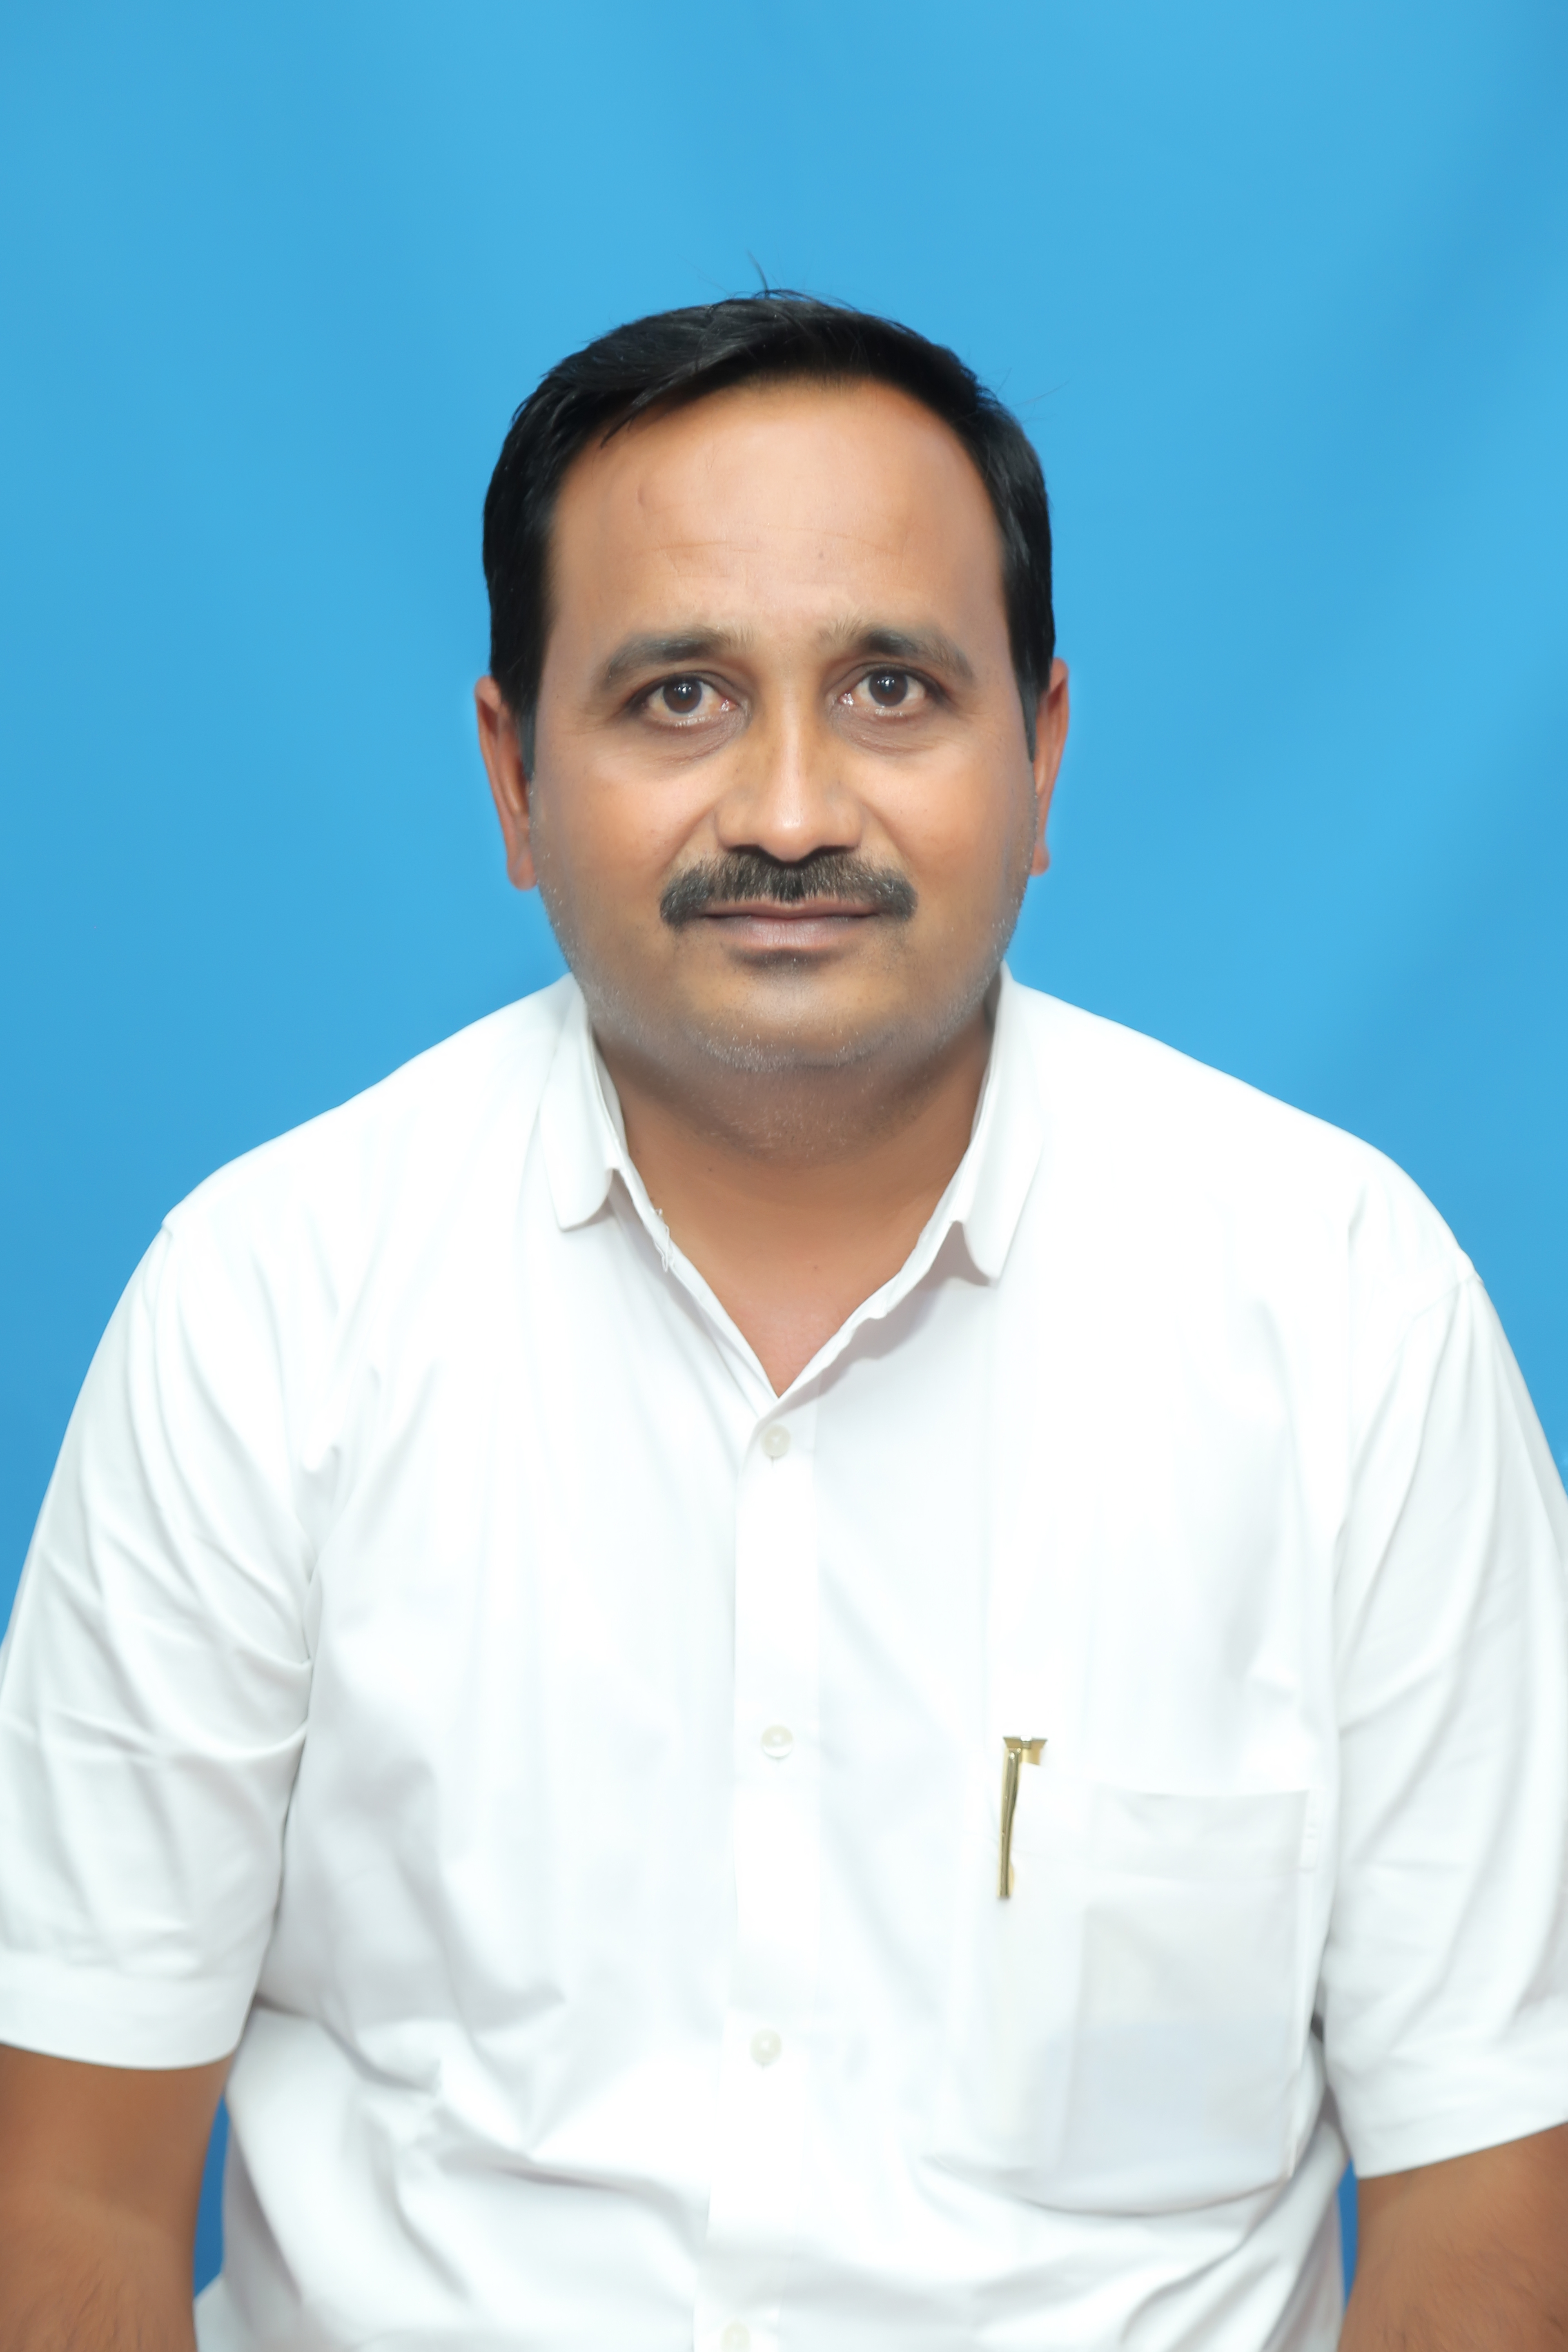 Mr. Jayprakash Salunkhe